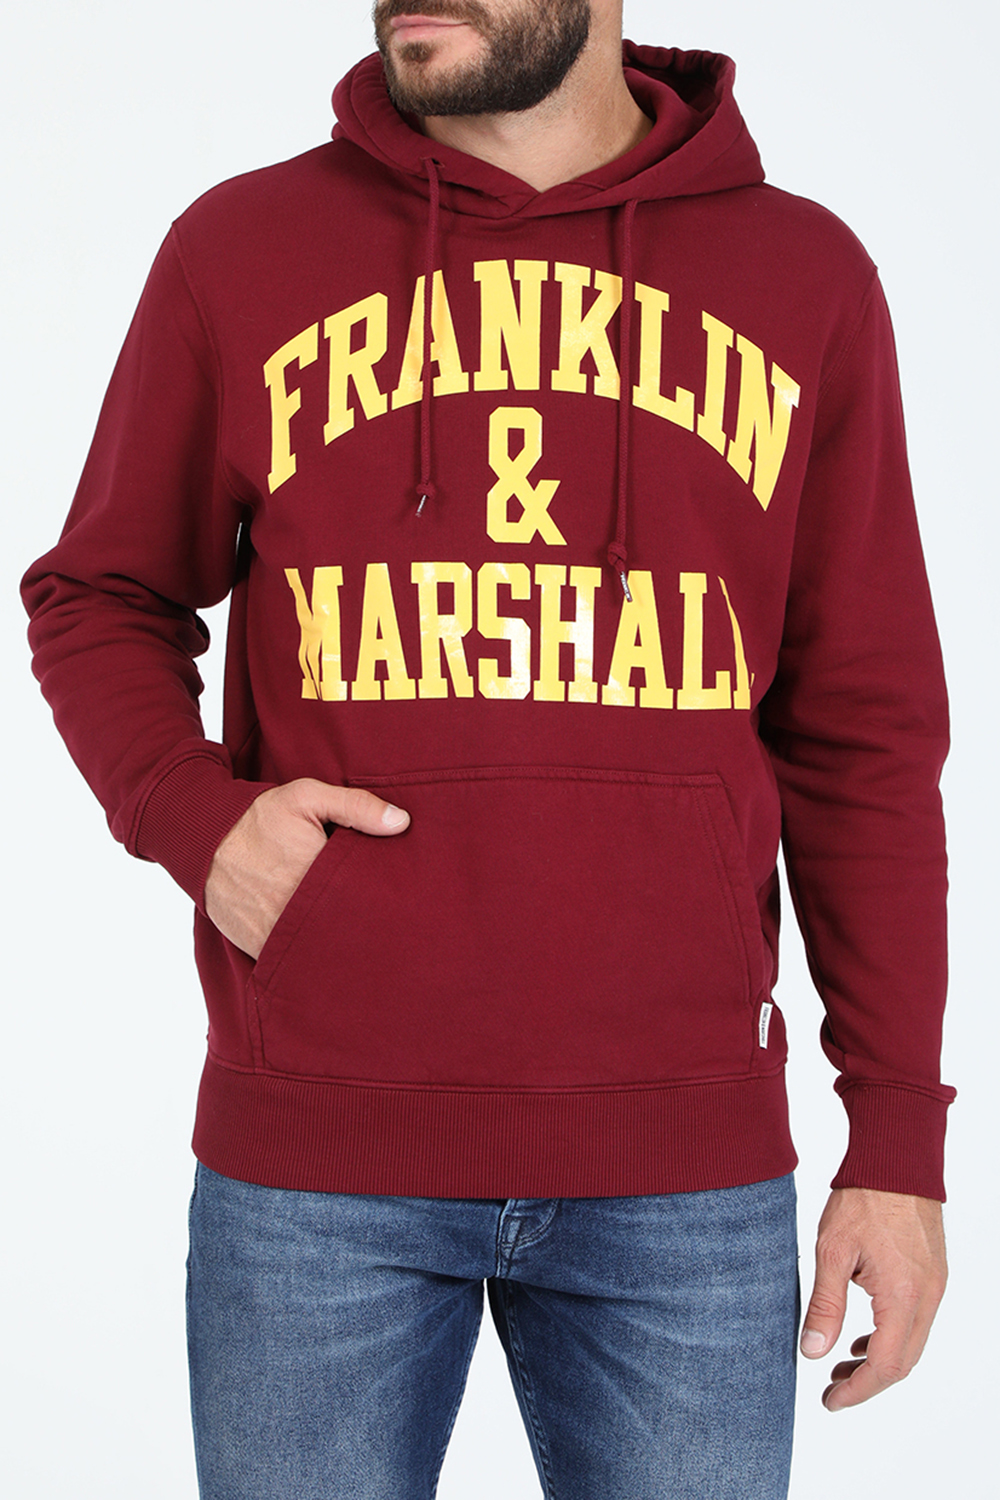 FRANKLIN & MARSHALL – Ανδρικη φουτερ μπλουζα FRANKLIN & MARSHALL μπορντο